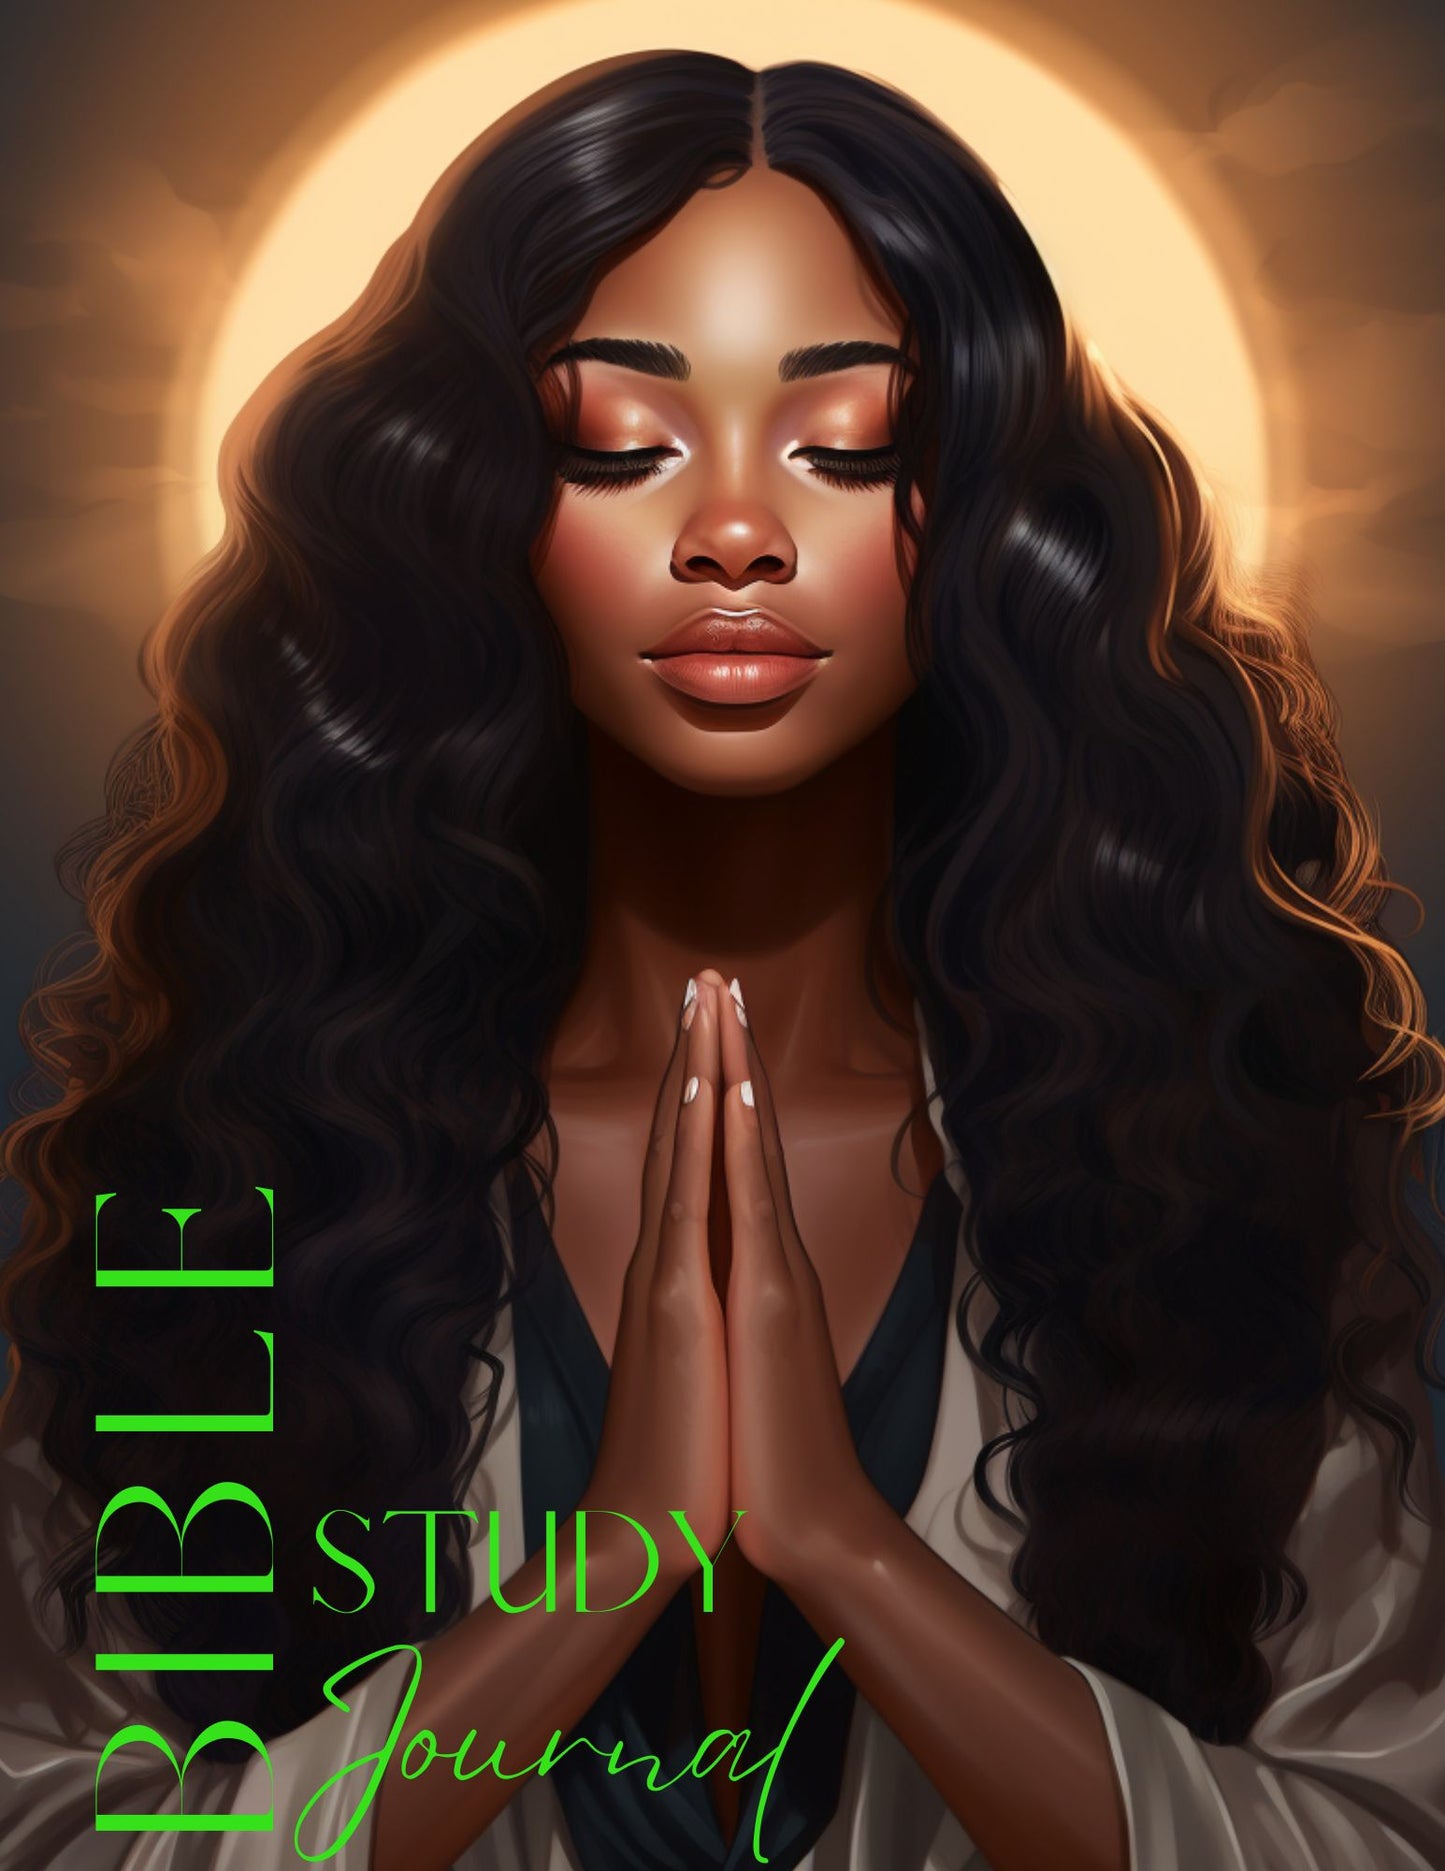 Prayer/ Bible Study Journal